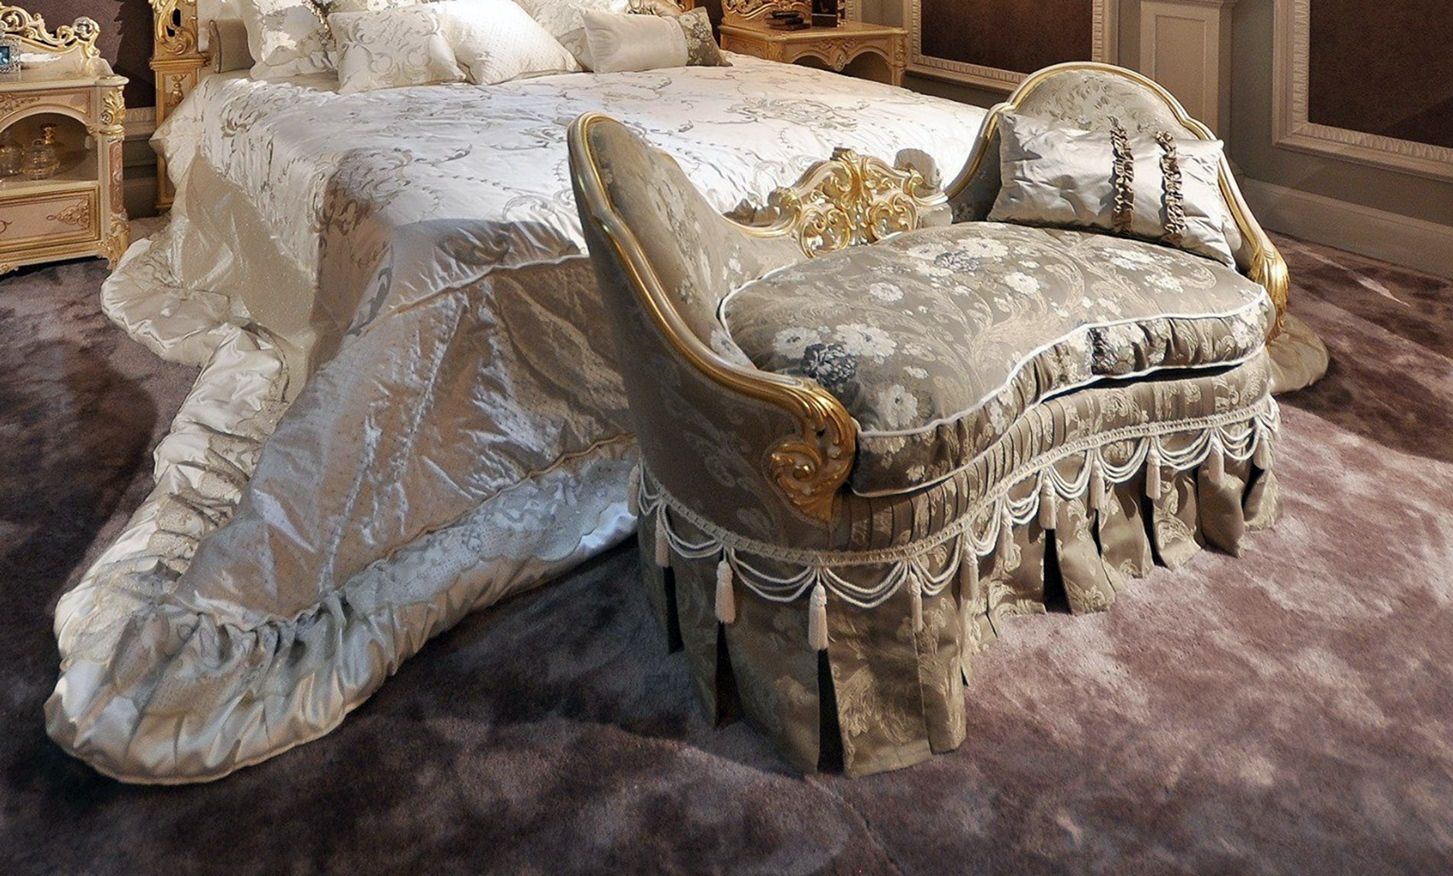 Striking Motifs In In Luxury Royal Bedroom